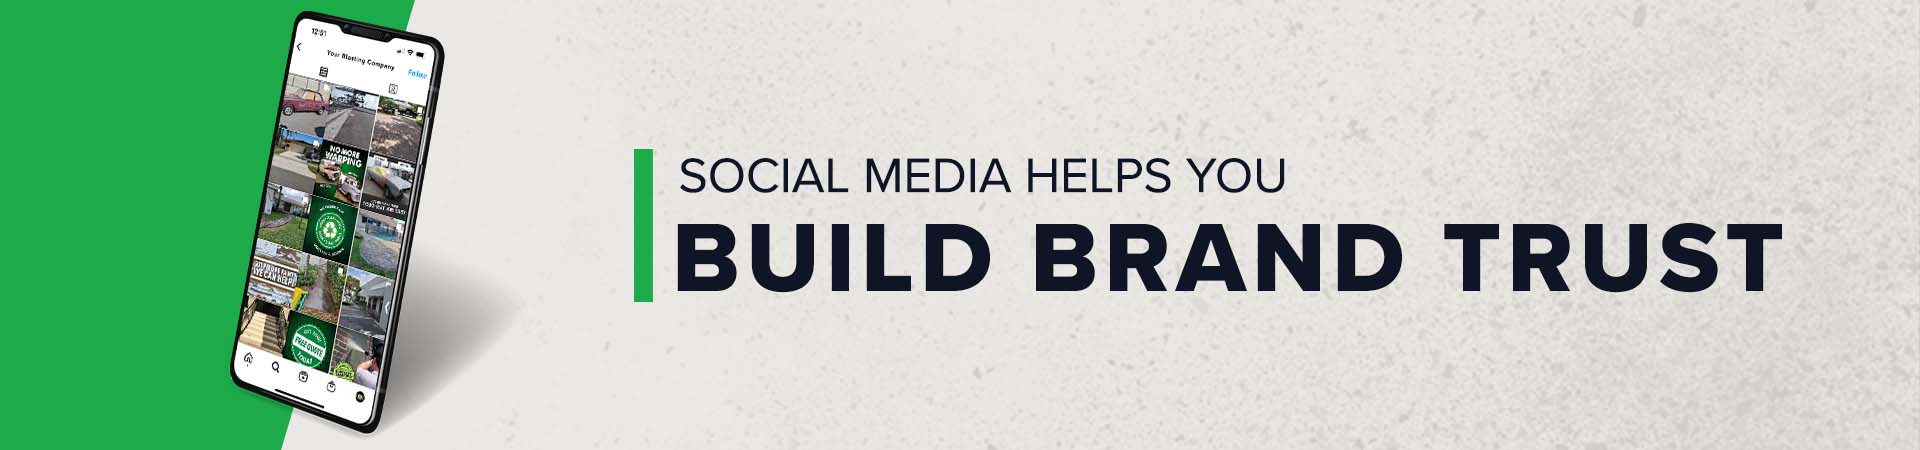 social media helps you build brand trust